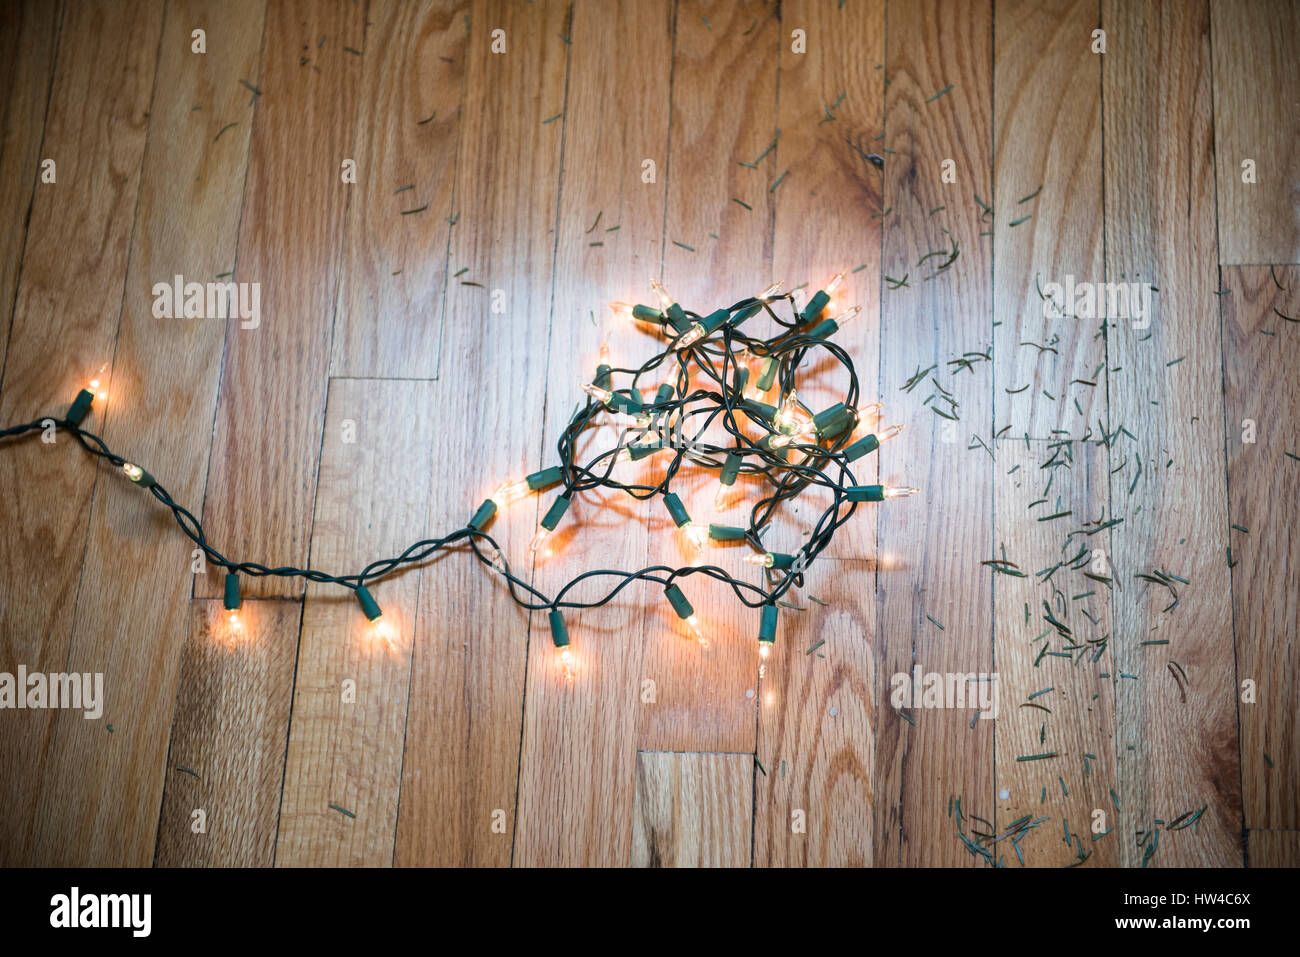 String lights on floor with Christmas tree pine needles Stock Photo